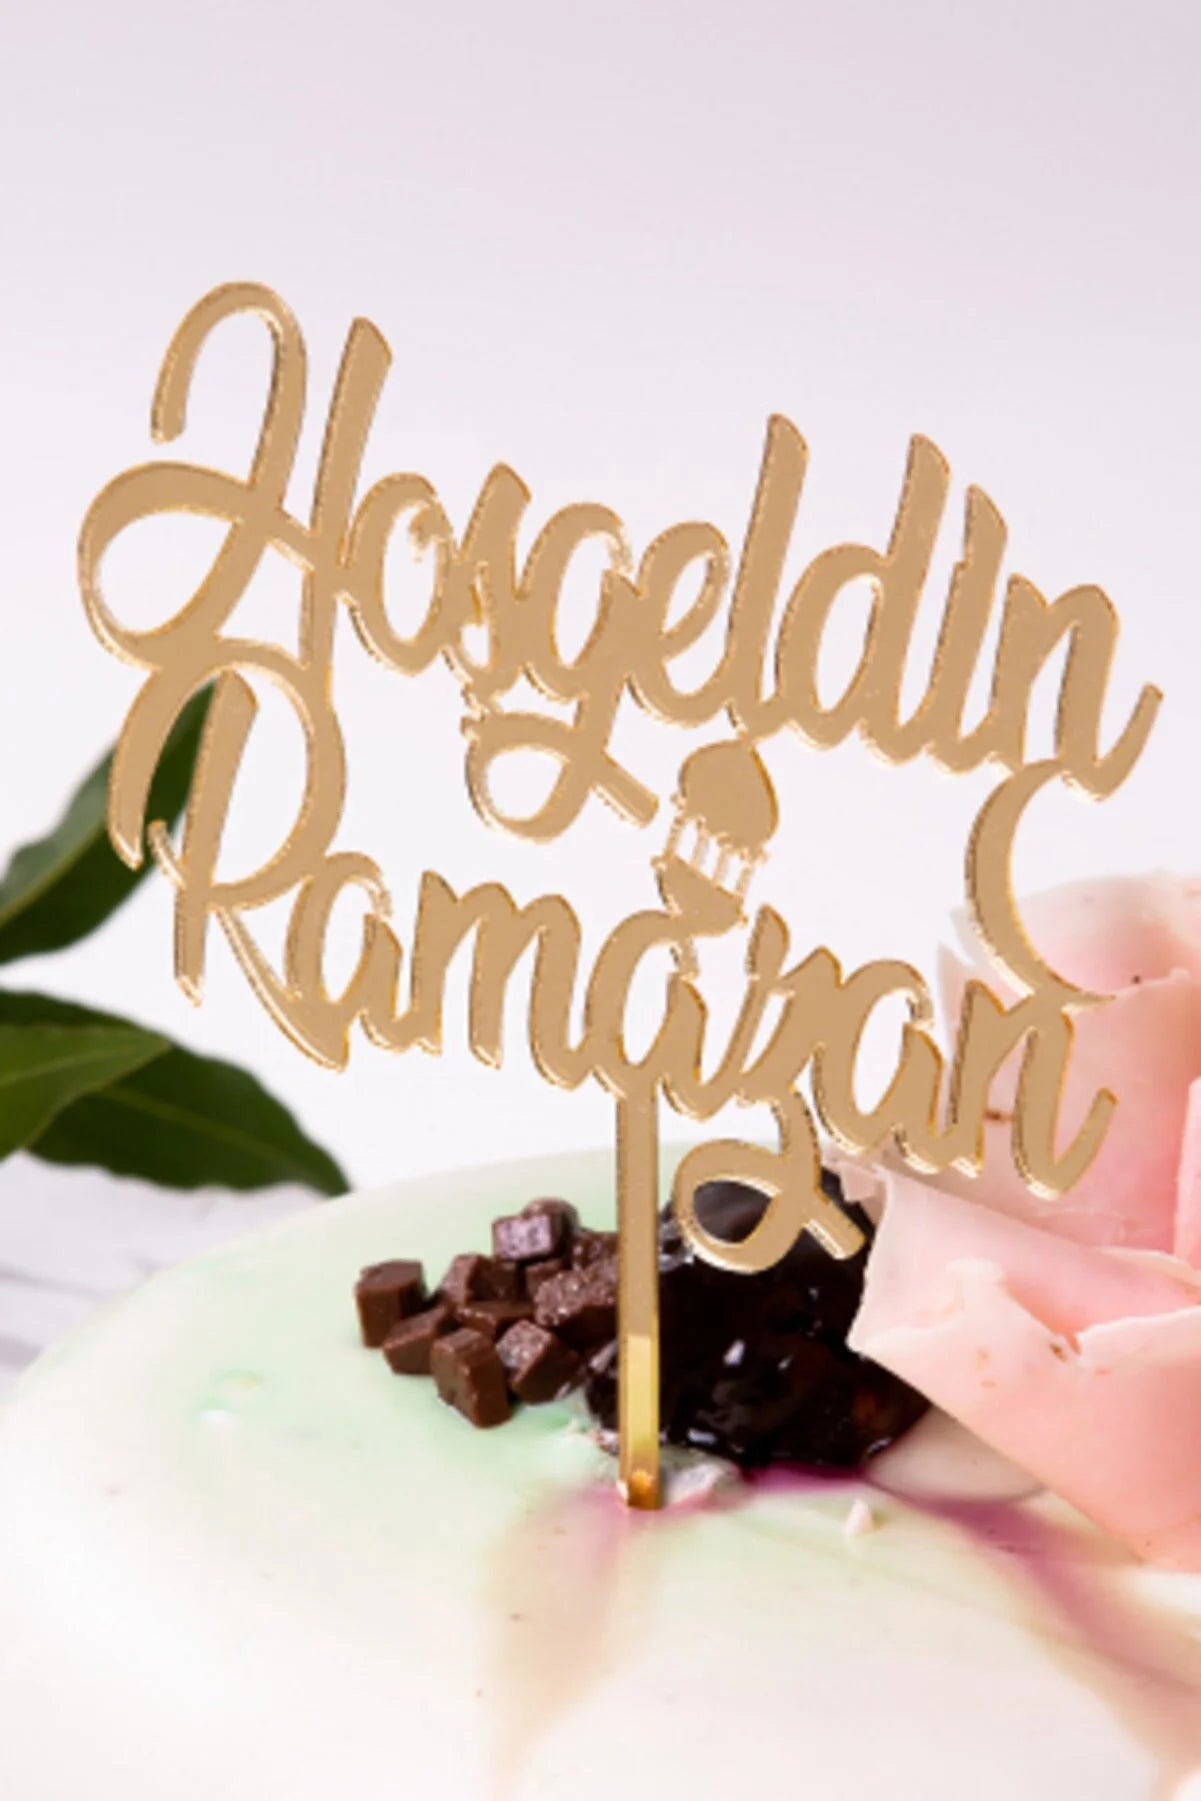 Cake Popper mit den Schriften "Hosgeldin Ramazan" & "Eid Mubarak" in Gold*